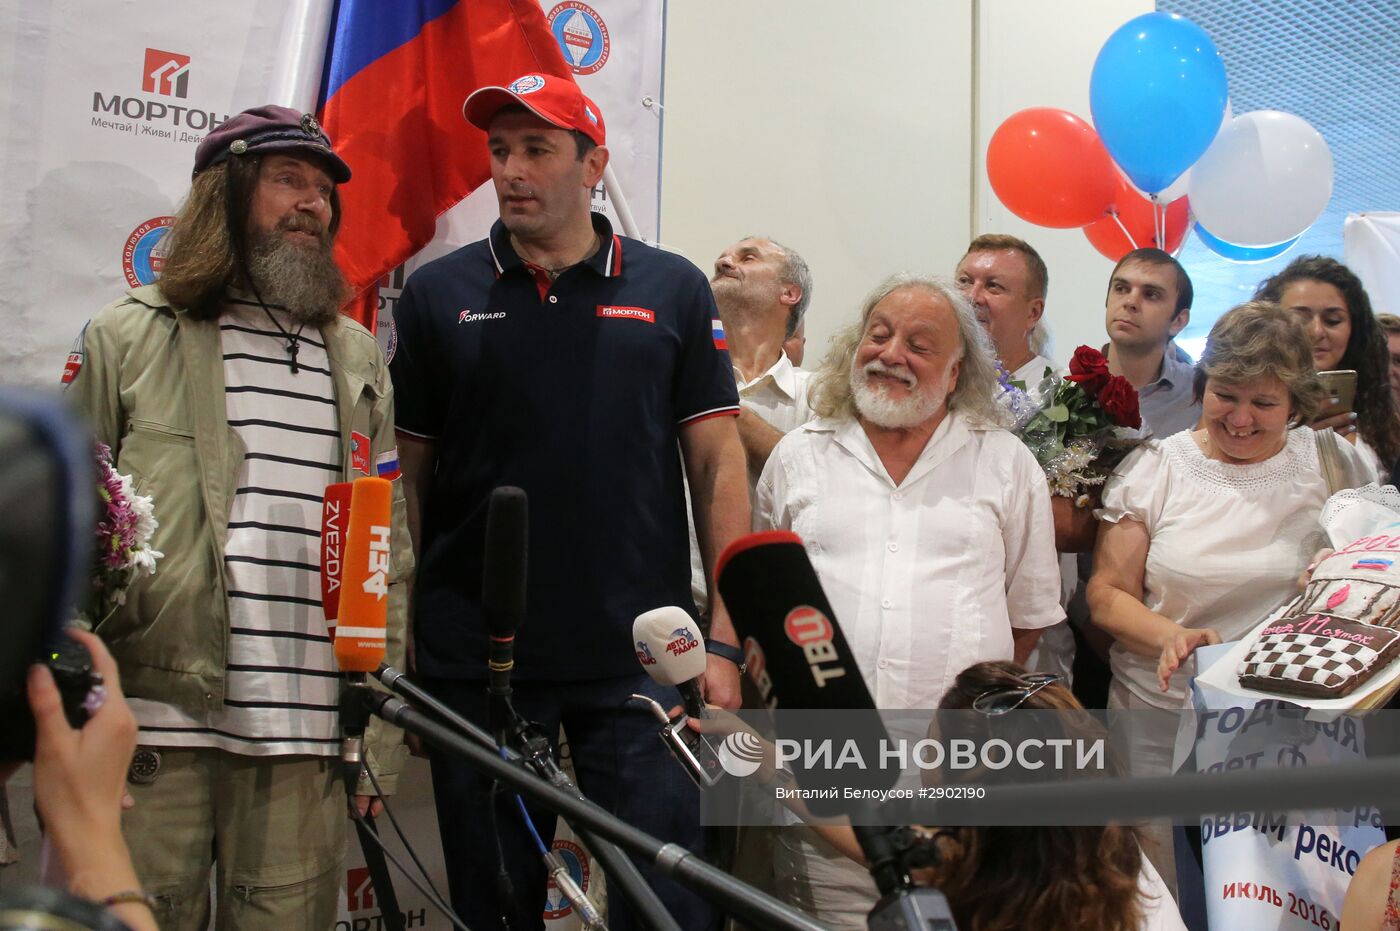 Встреча Федора Конюхова после рекордного перелета на воздушном шаре вокруг земли